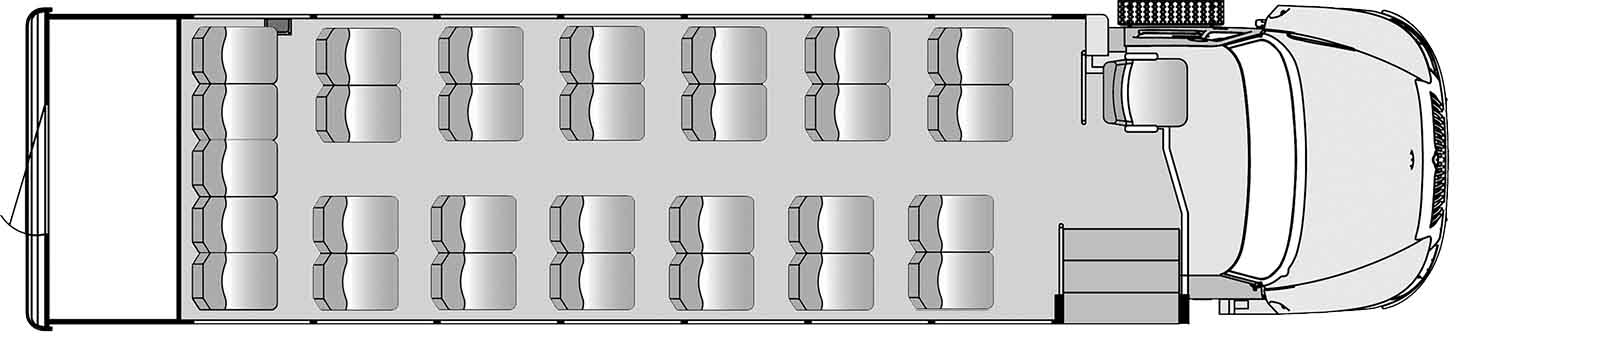 29 Passenger with Rear Luggage Plus Driver Floorplan Image